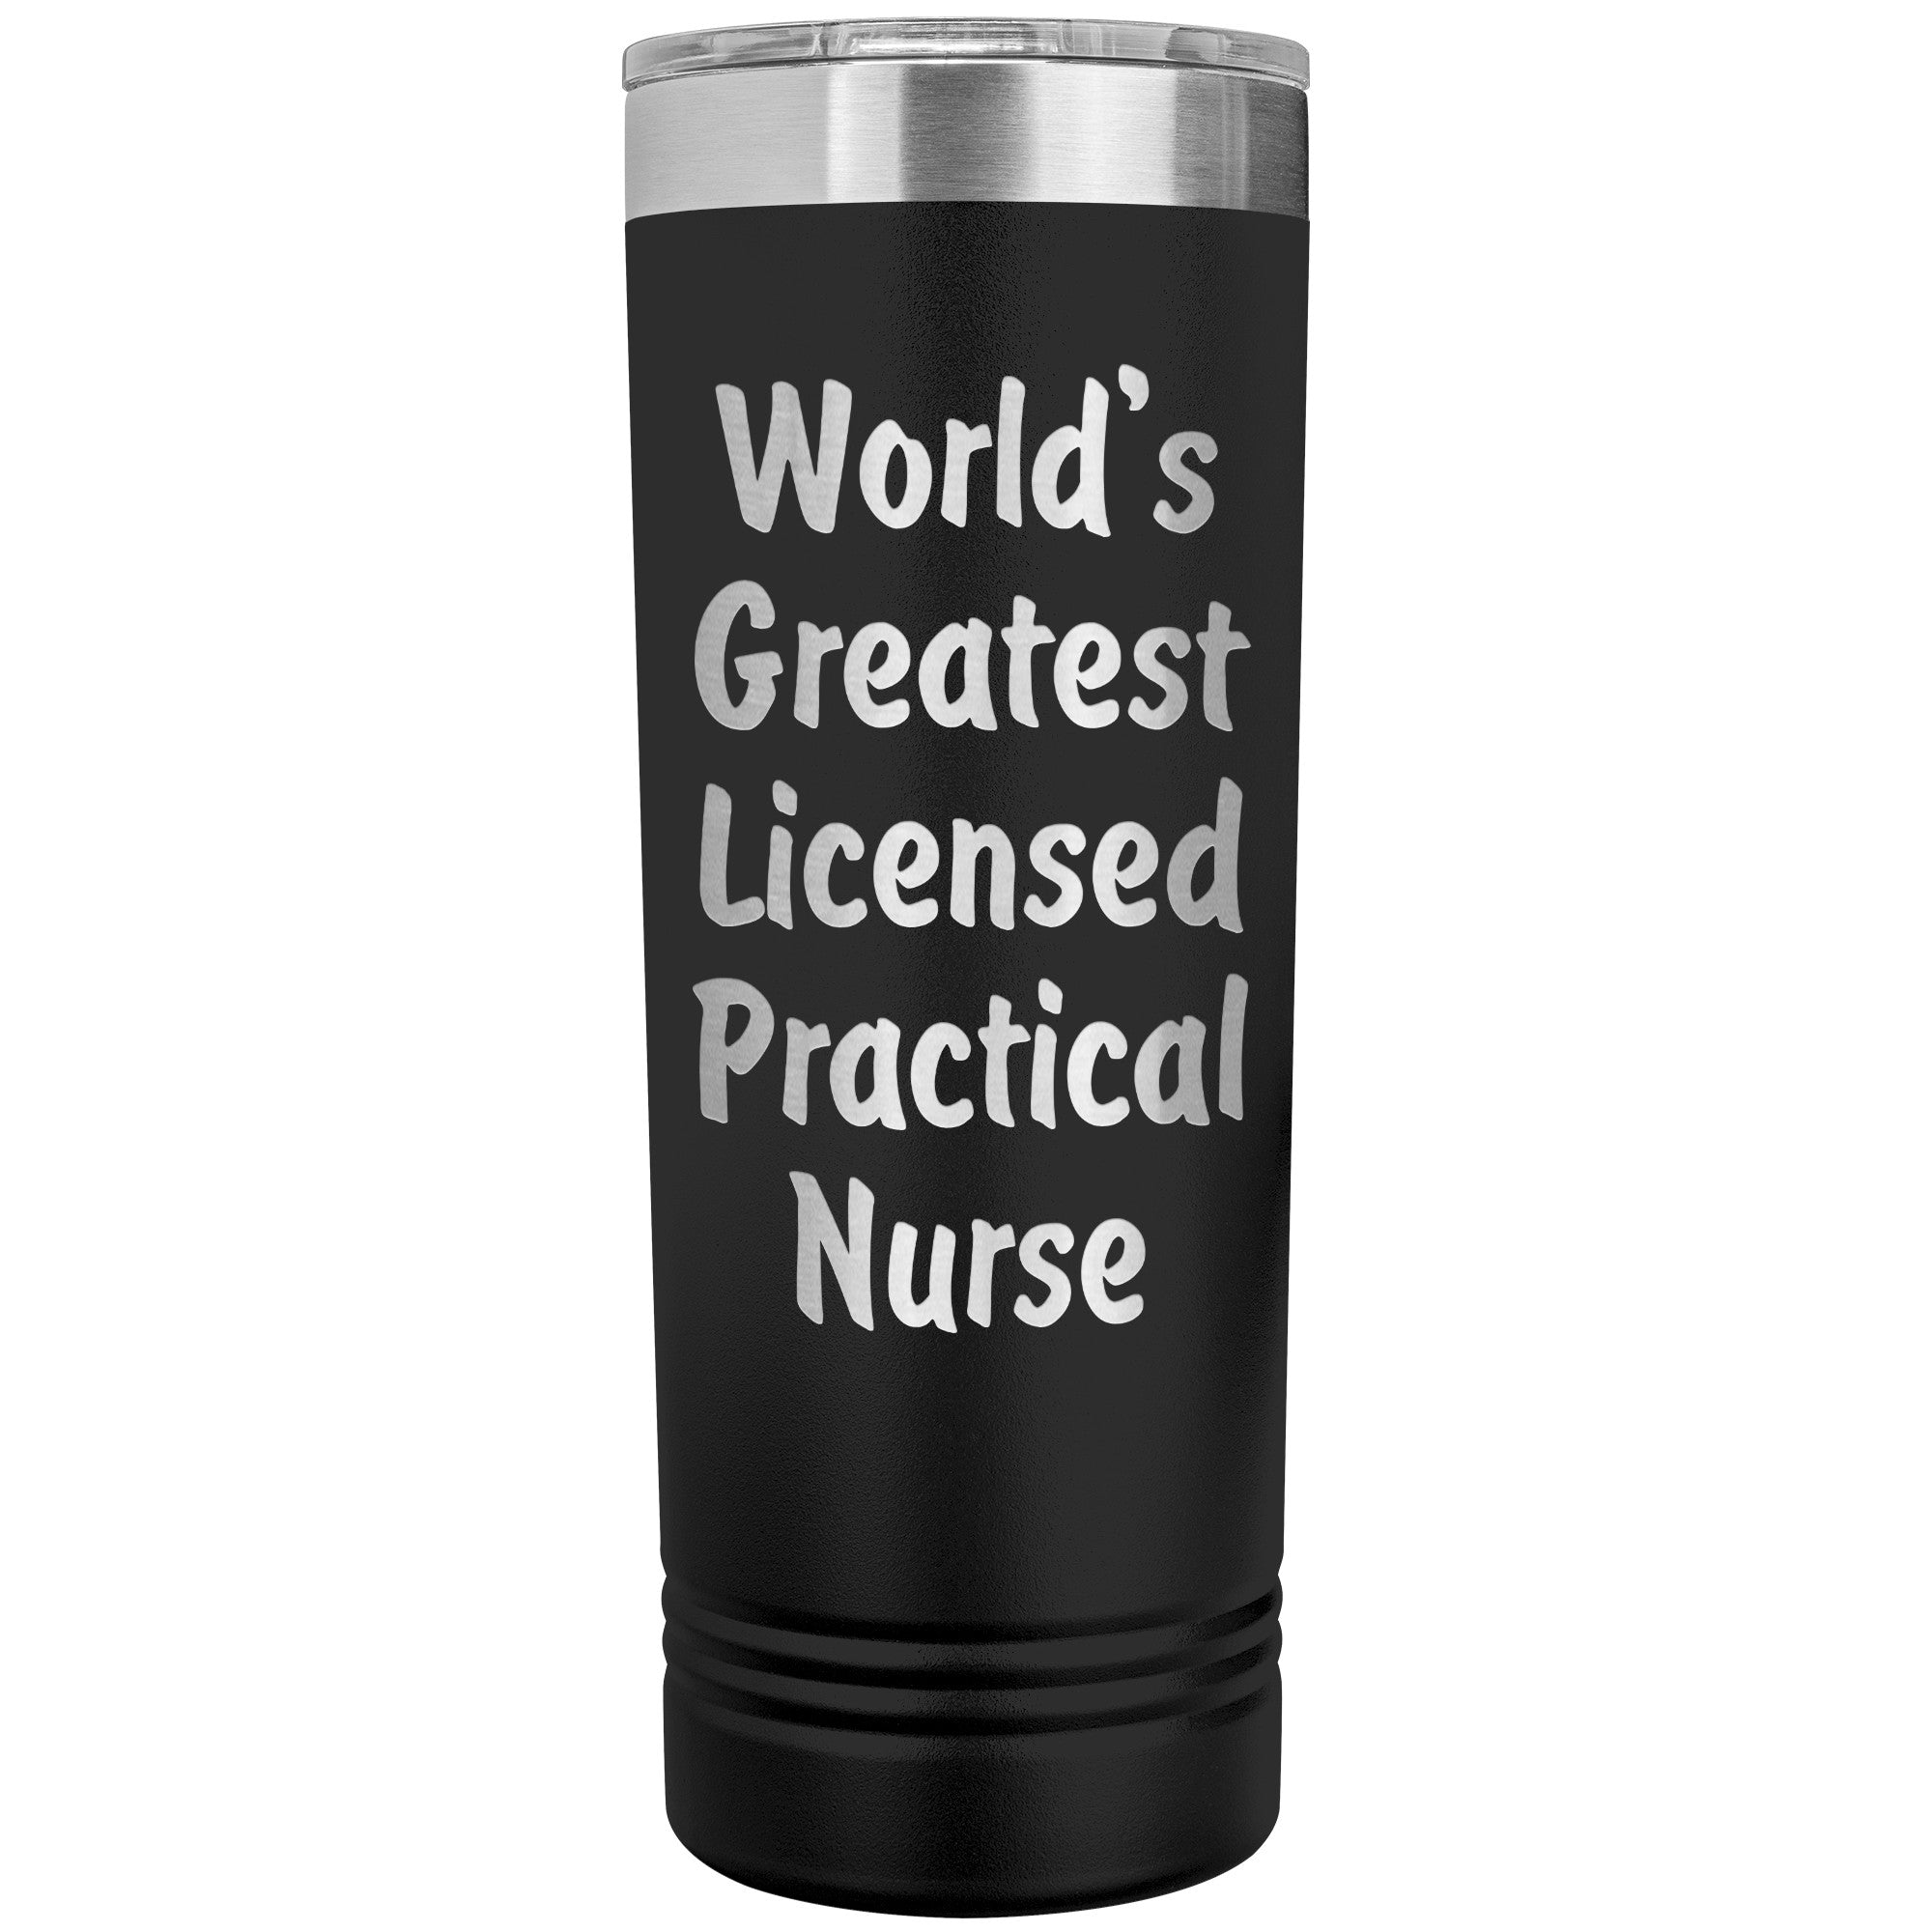 World's Greatest Licensed Practical Nurse - 22oz Insulated Skinny Tumbler